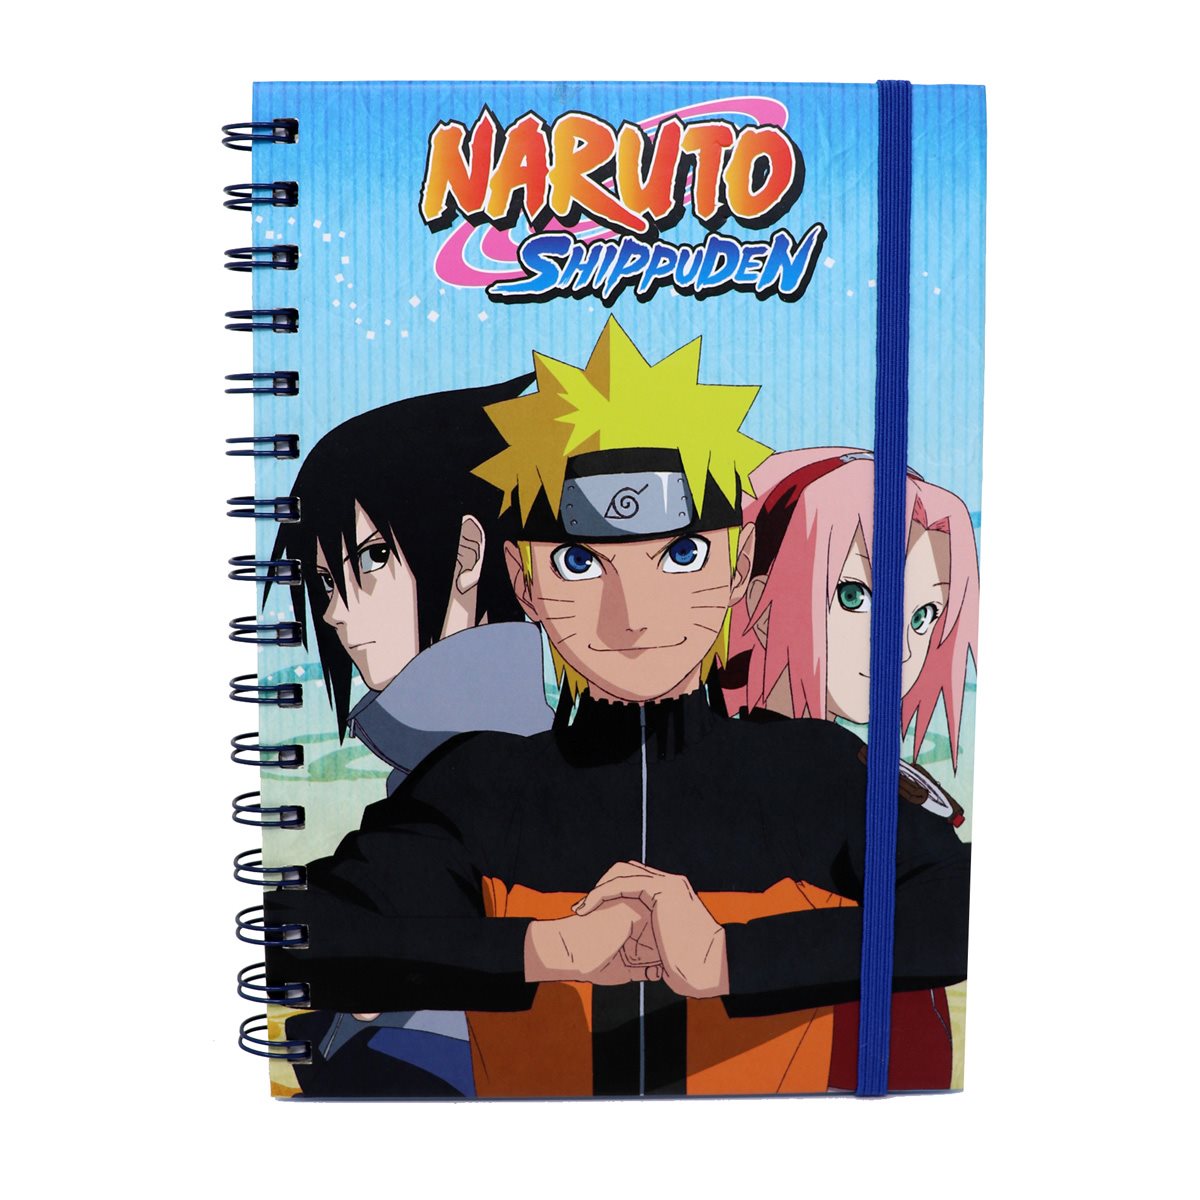 Boruto Naruto #292 Spiral Notebook by Nguyen Hai - Pixels